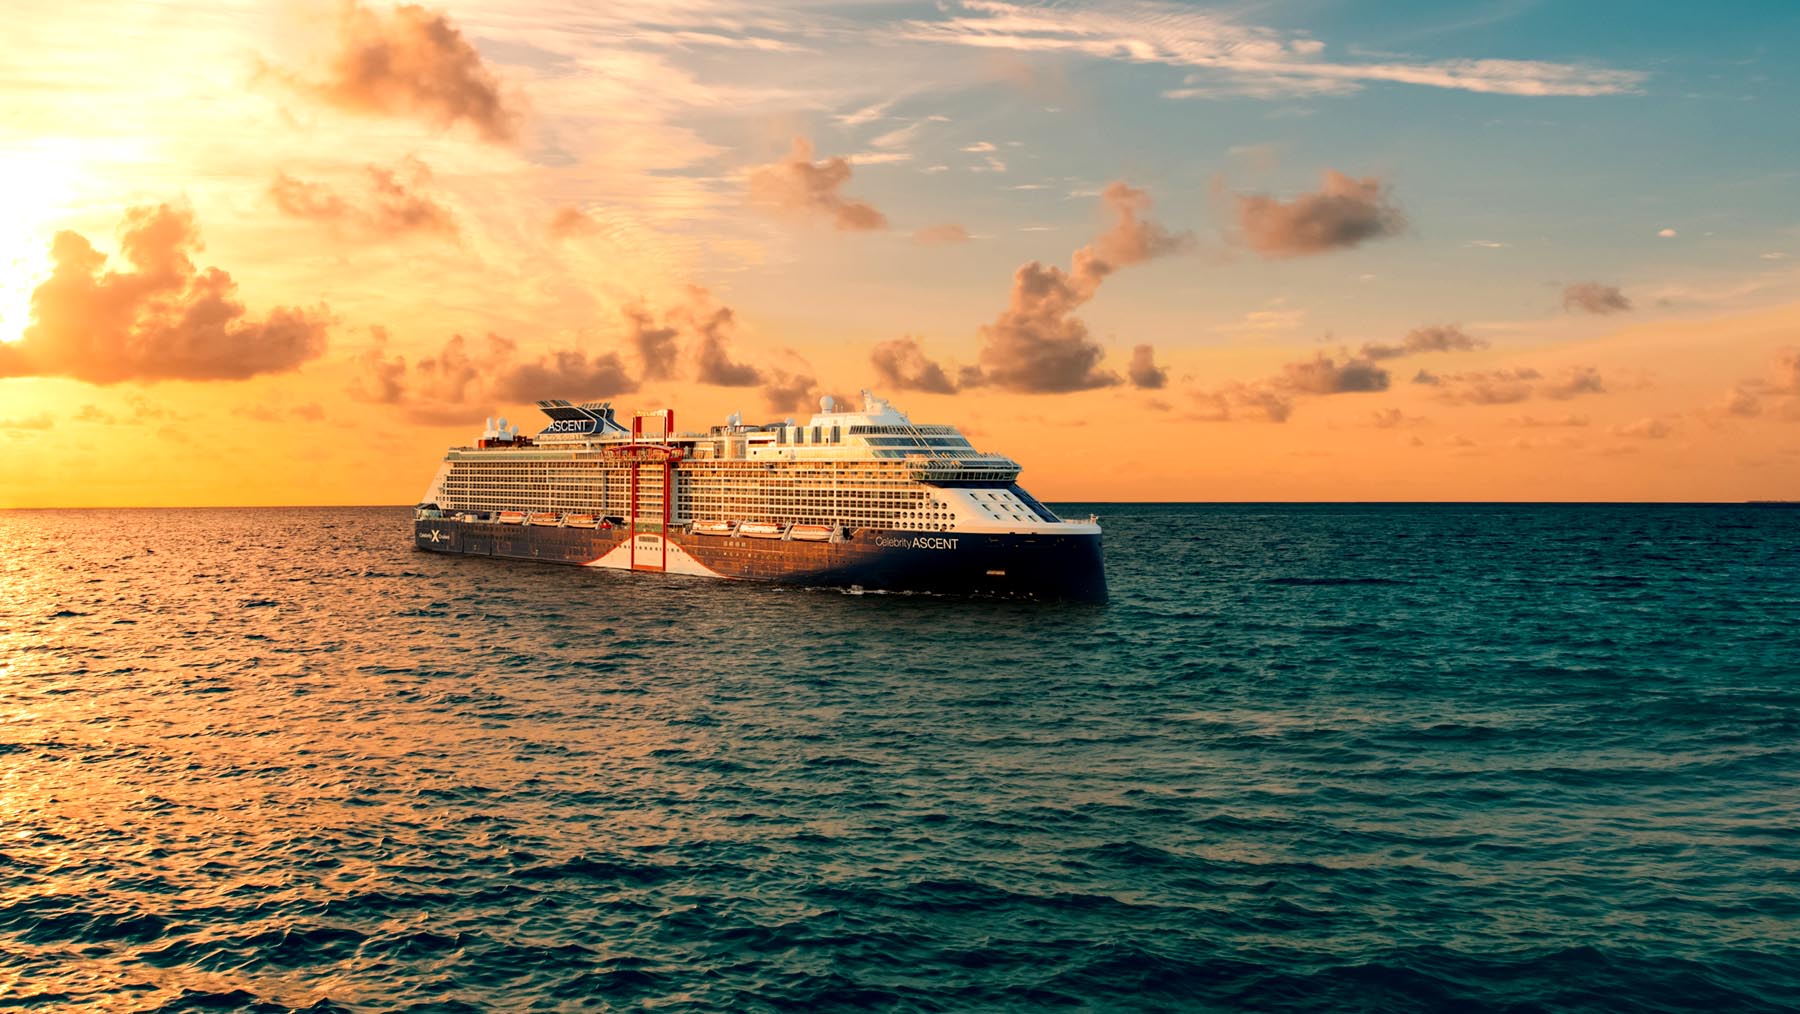 Celebrity Cruises sails the high seas